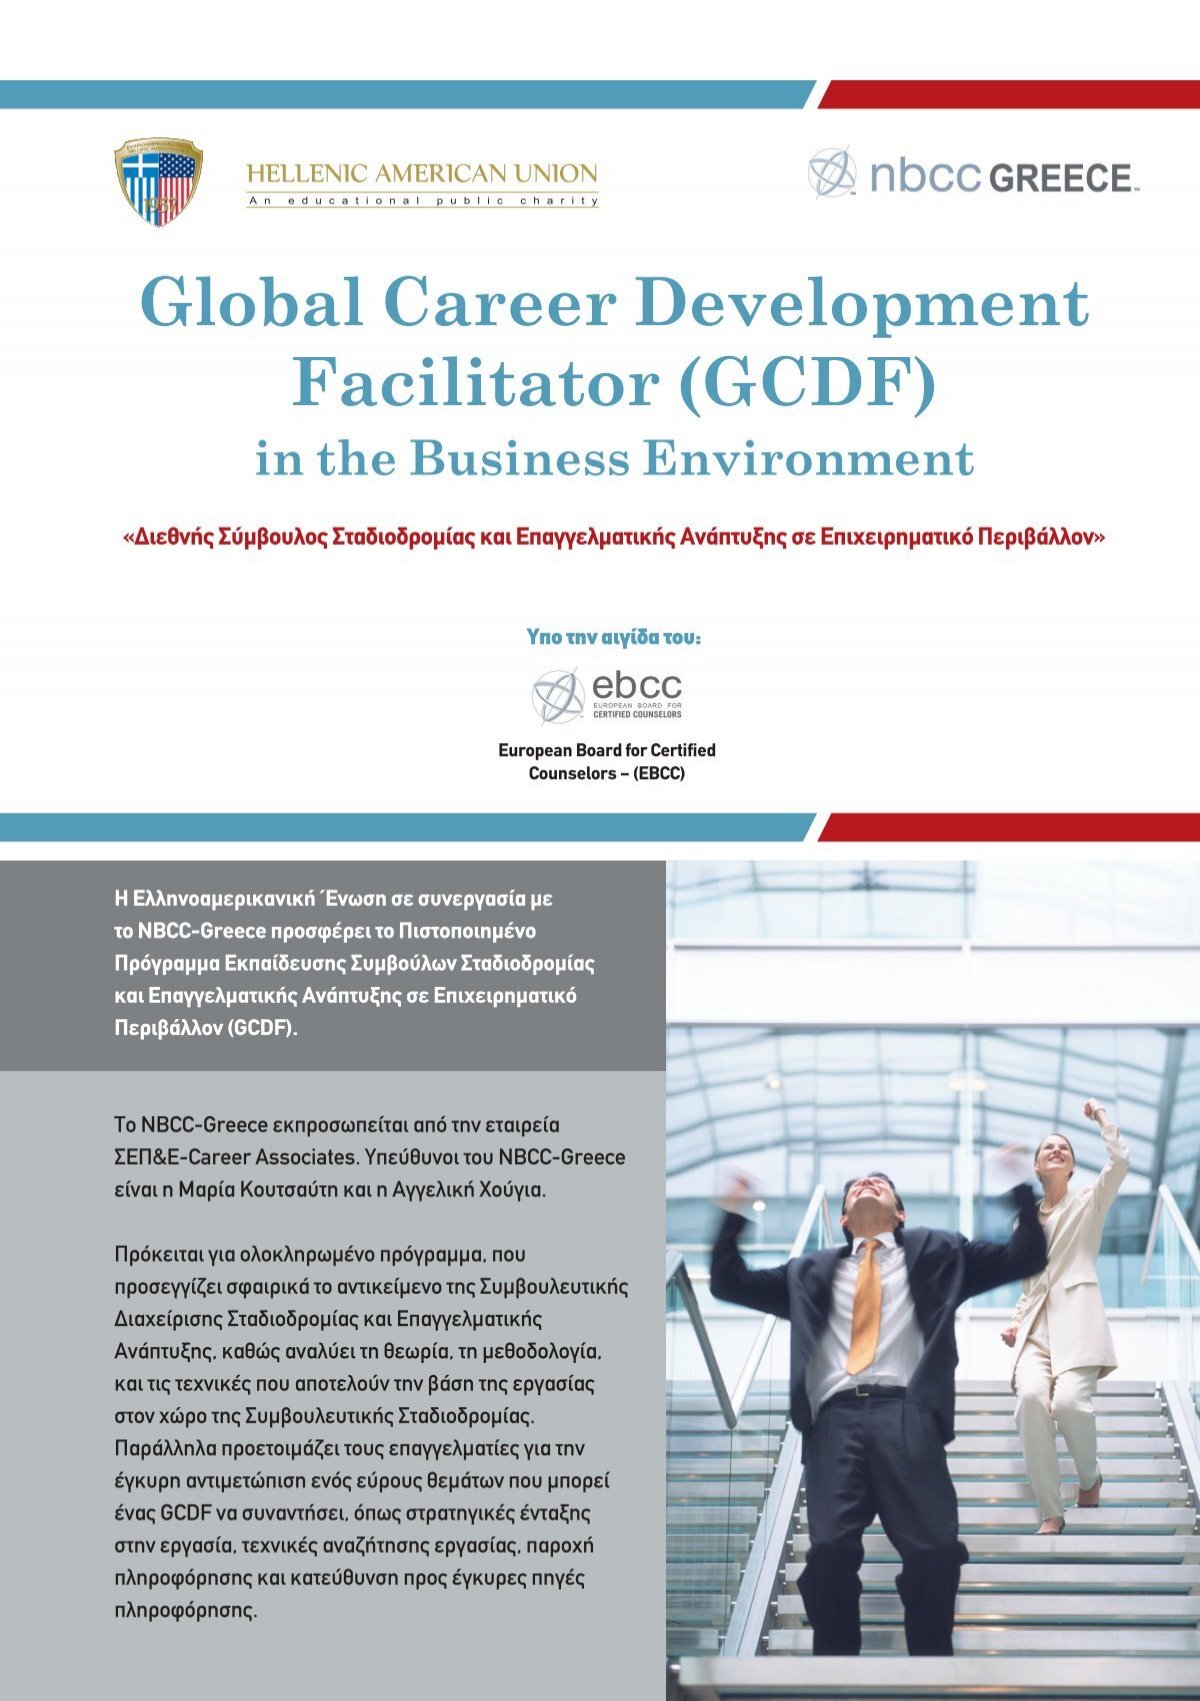 Global Career Development Facilitator (GCDF) in the Business